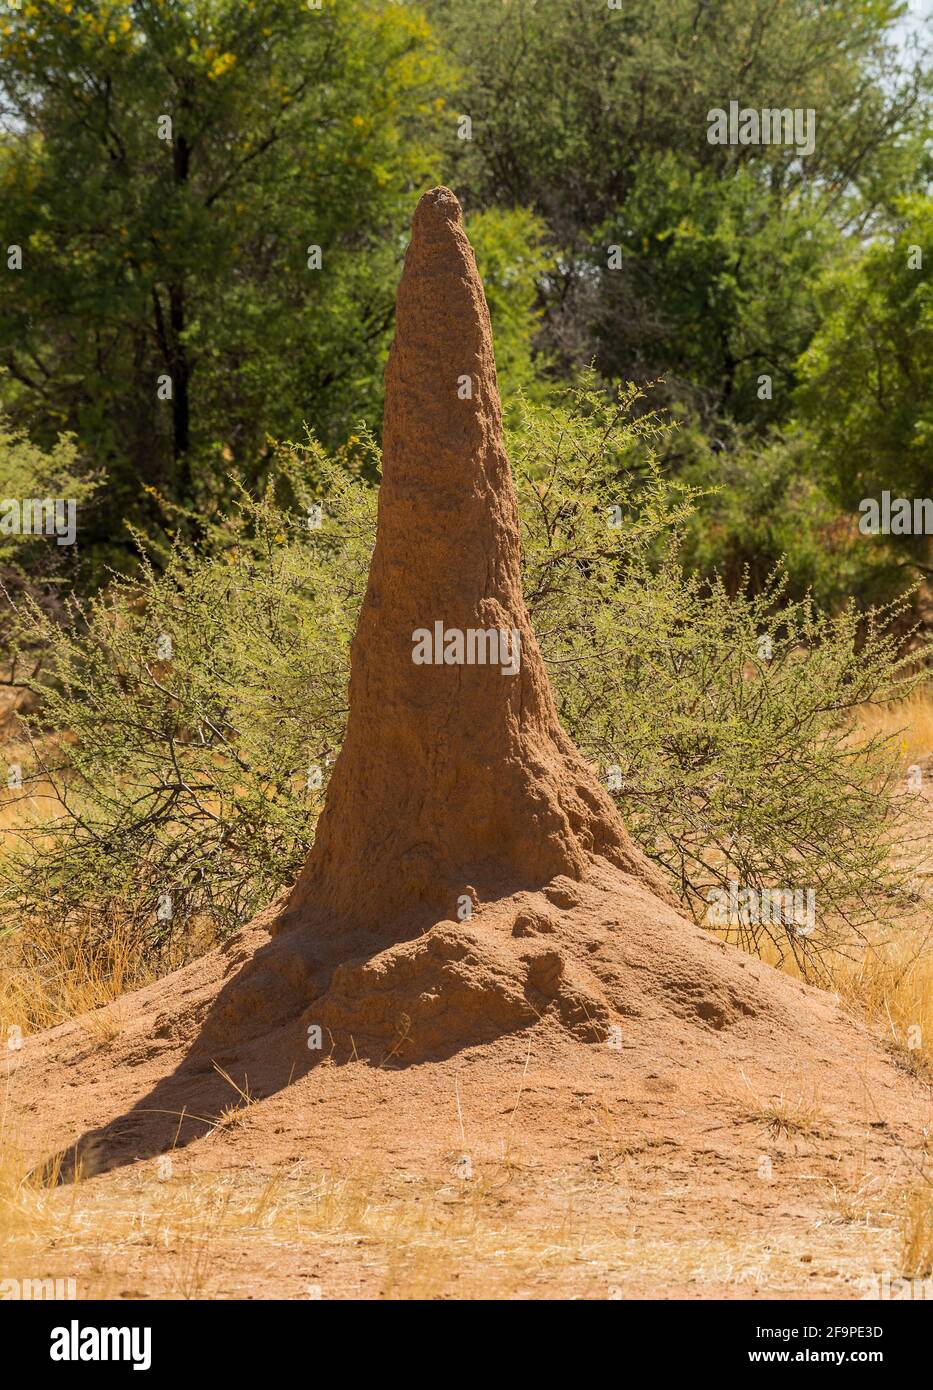 Bush landscape with a large termite mound, Namibia Stock Photo